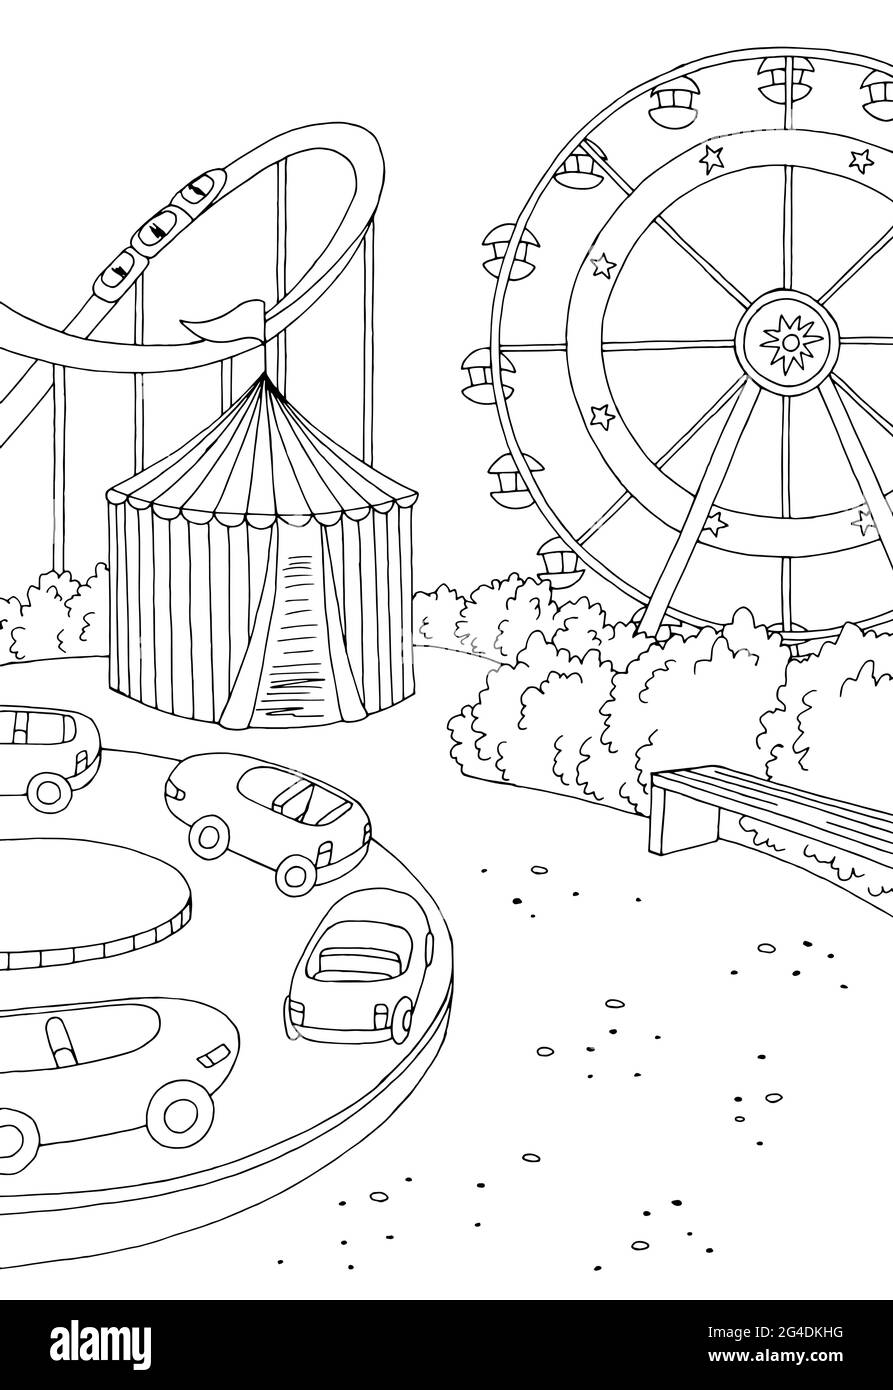 Amusement park drawing Vectors  Illustrations for Free Download  Freepik